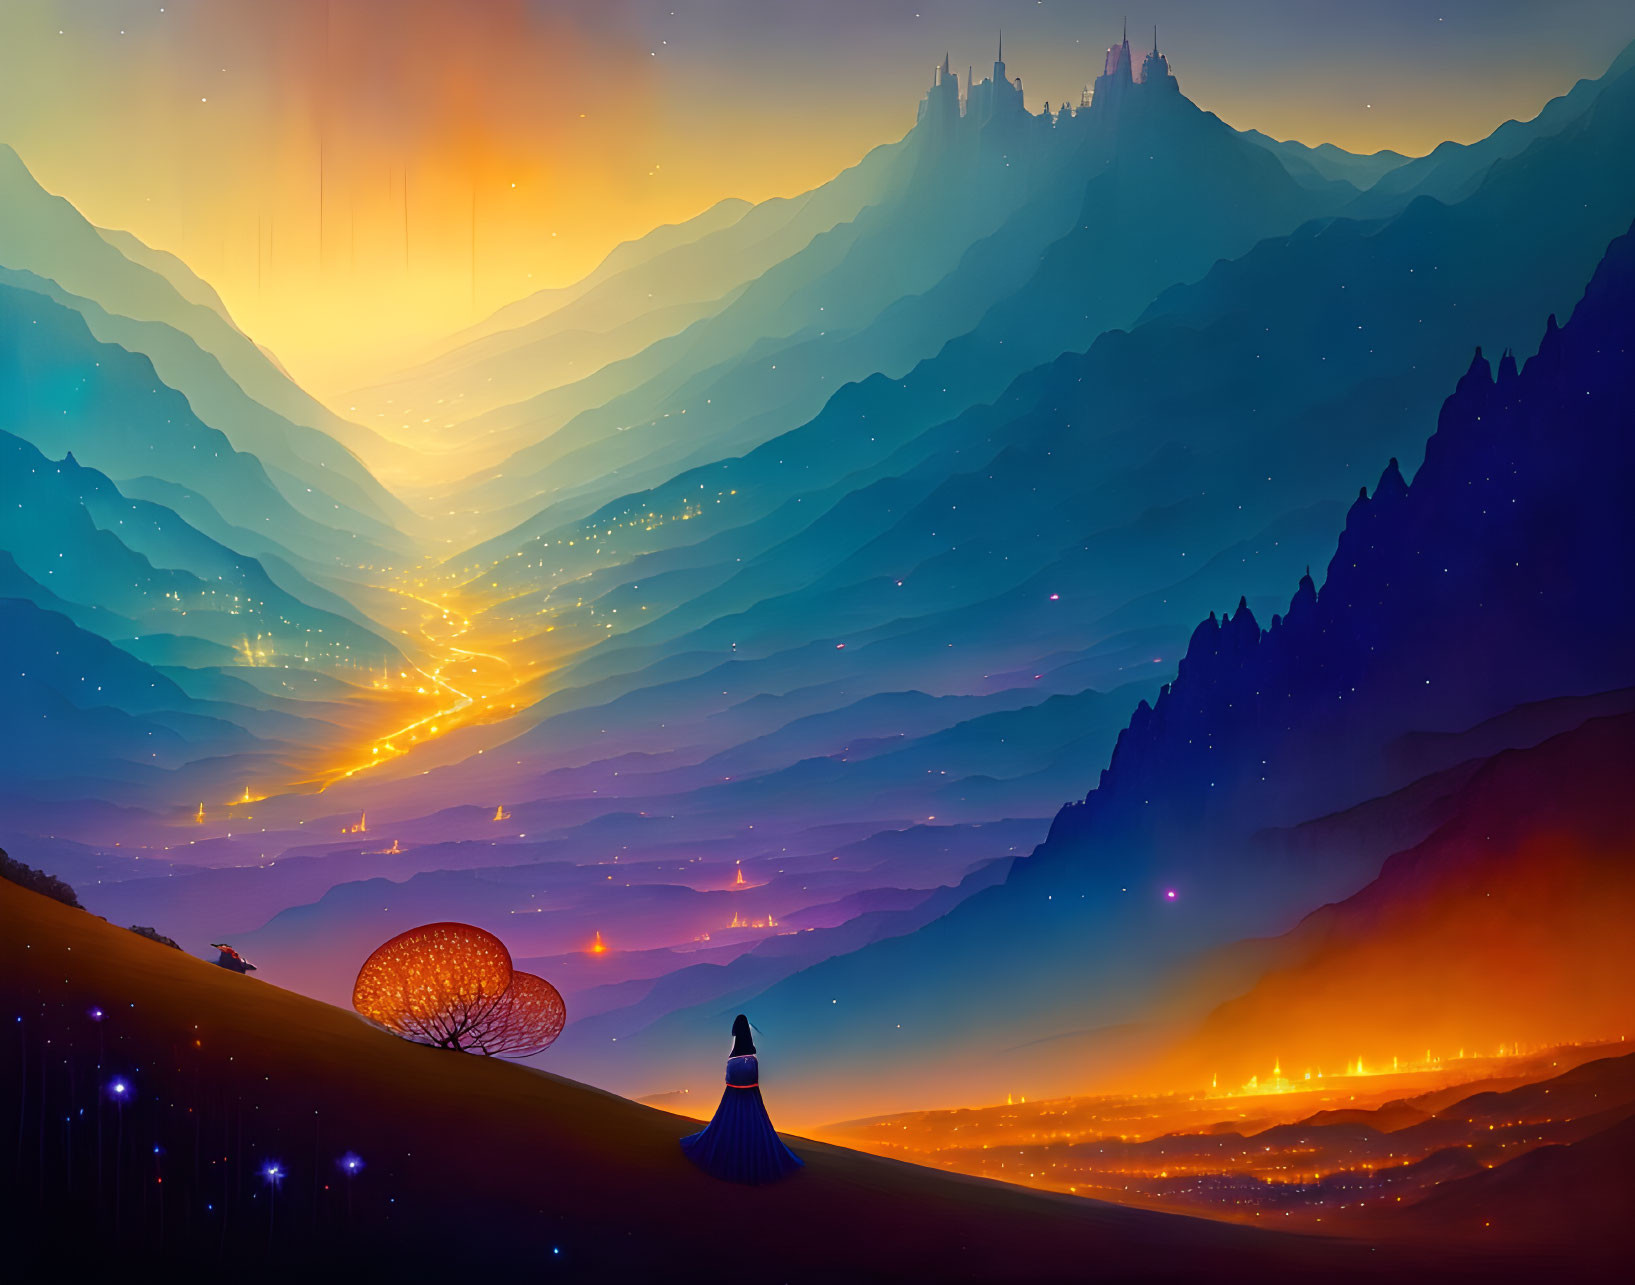 Mystical landscape digital artwork with figure at twilight